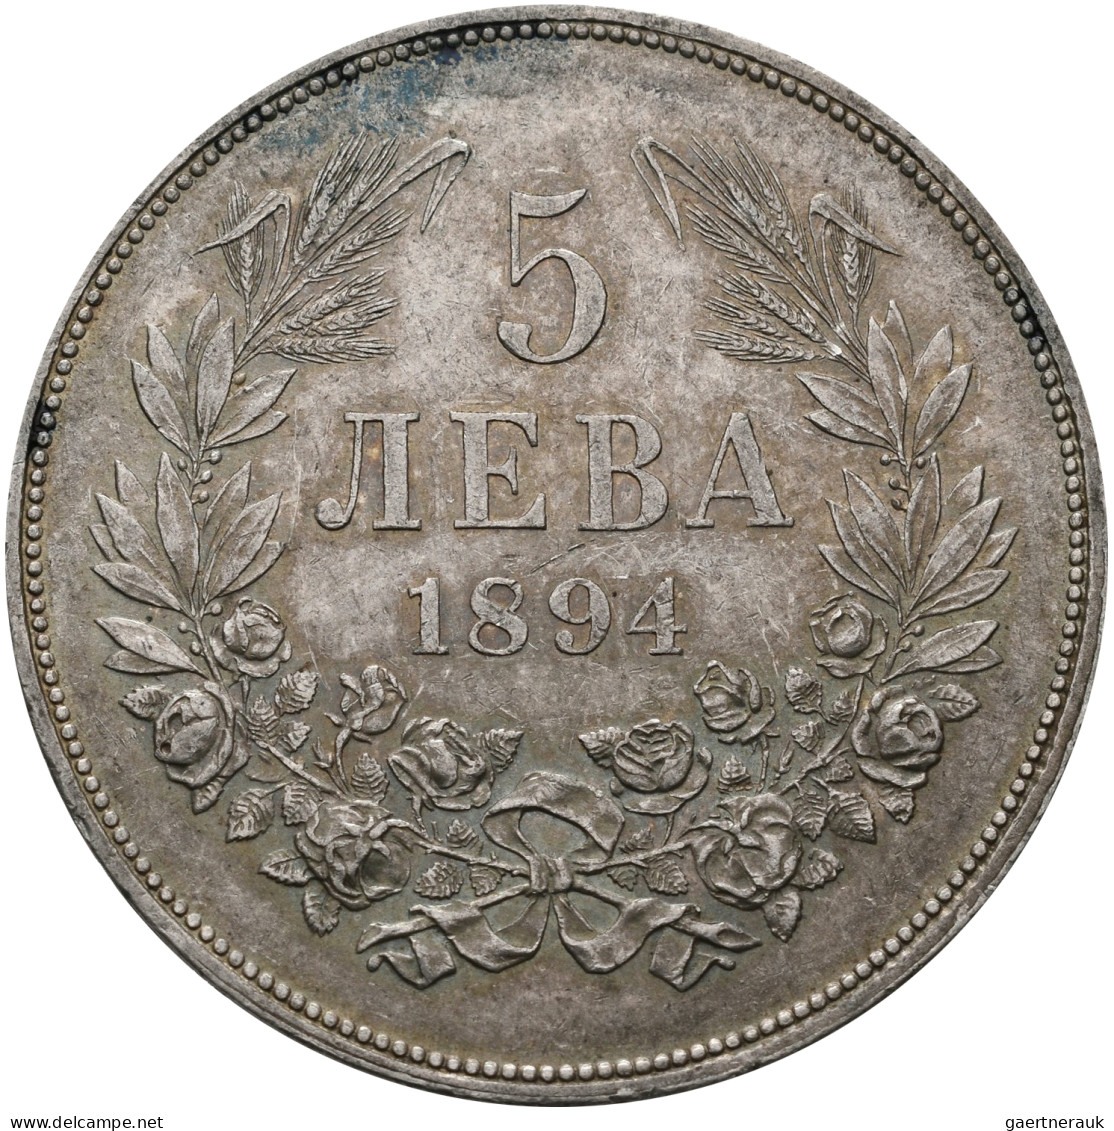 Bulgarien: Ferdinand I. 1887-1908: 5 Leva 1894, KM# 18, Fast Vorzüglich. - Bulgarie